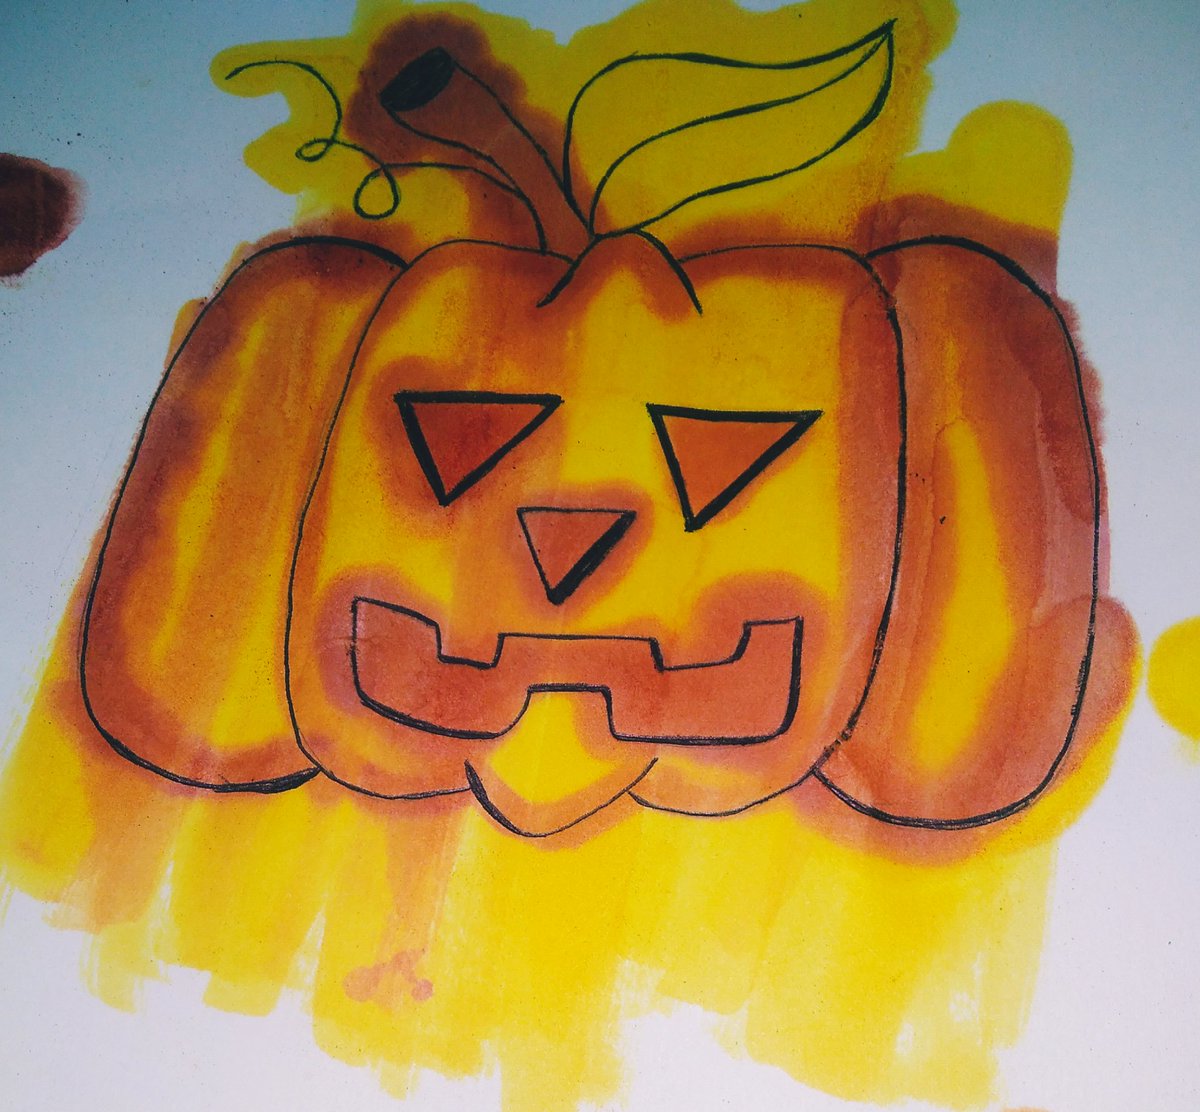 Invisible INK || Halloween Pumpkin
youtu.be/KbezI0beNw0
.
.
.
#drawing #art #artist #sketch #illustration #artwork #draw #digitalart #painting #artistsoninstagram #sketchbook #fanart #drawings 
 #halloweenpumpkin #invisibleink #pumkindrawing #halloweendrawing #pumpkindraw